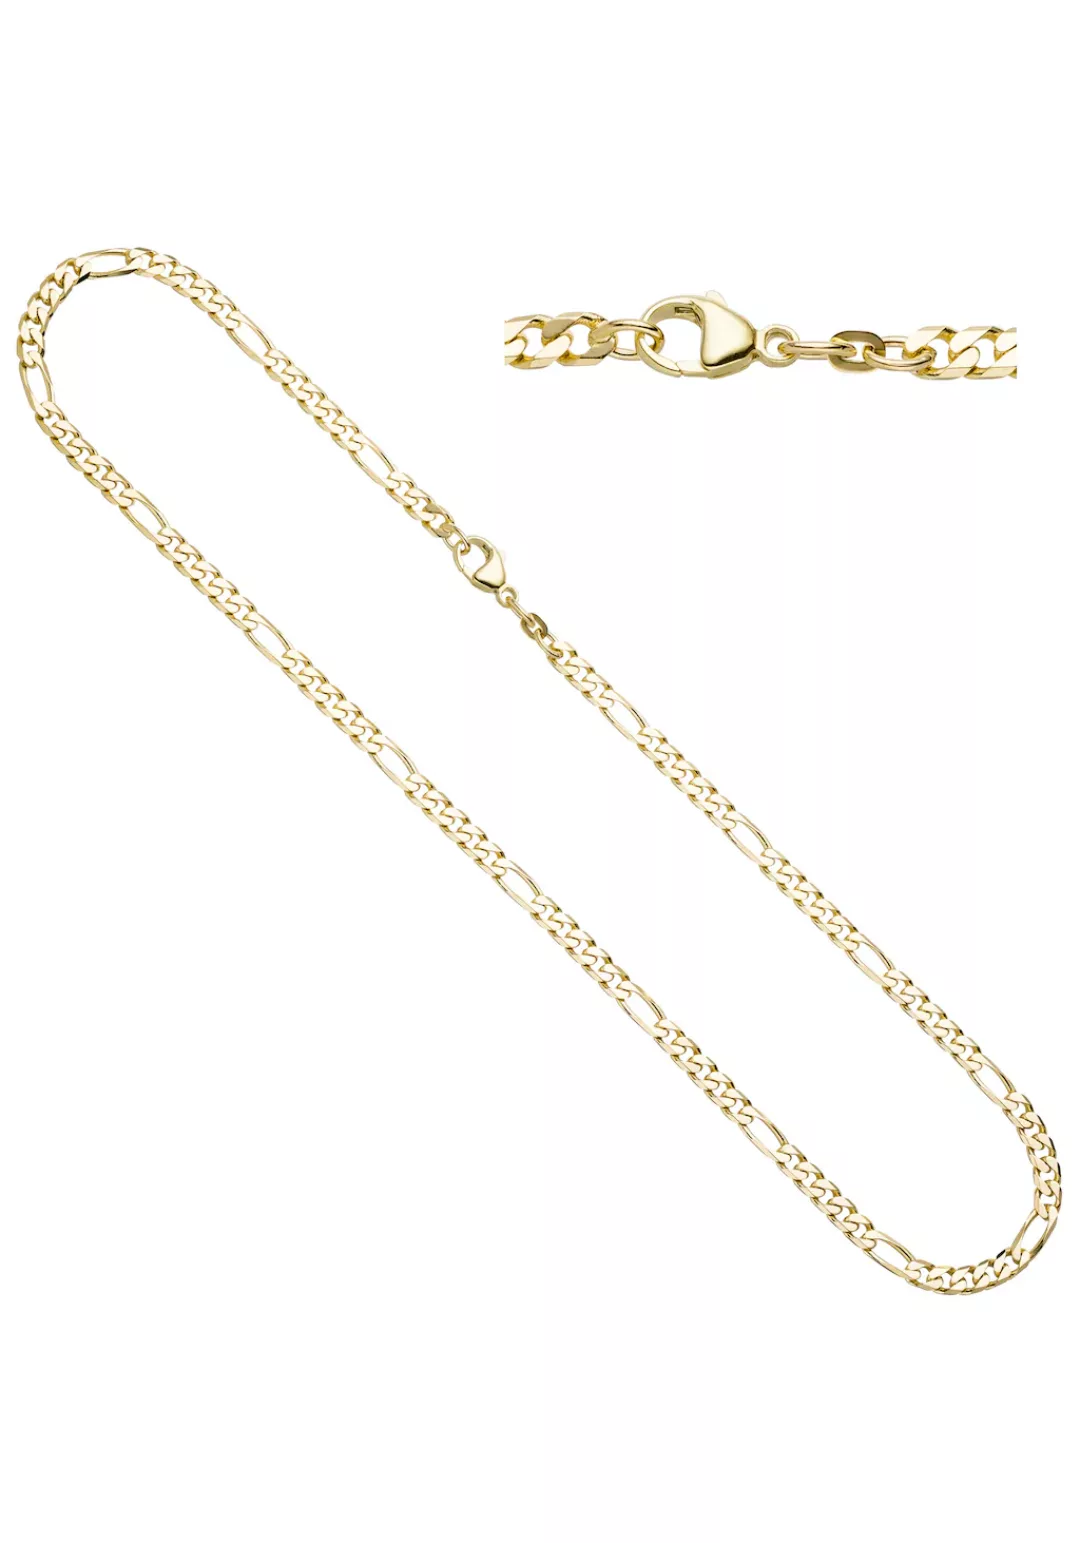 JOBO Goldkette, Figarokette 585 Gold 45 cm günstig online kaufen